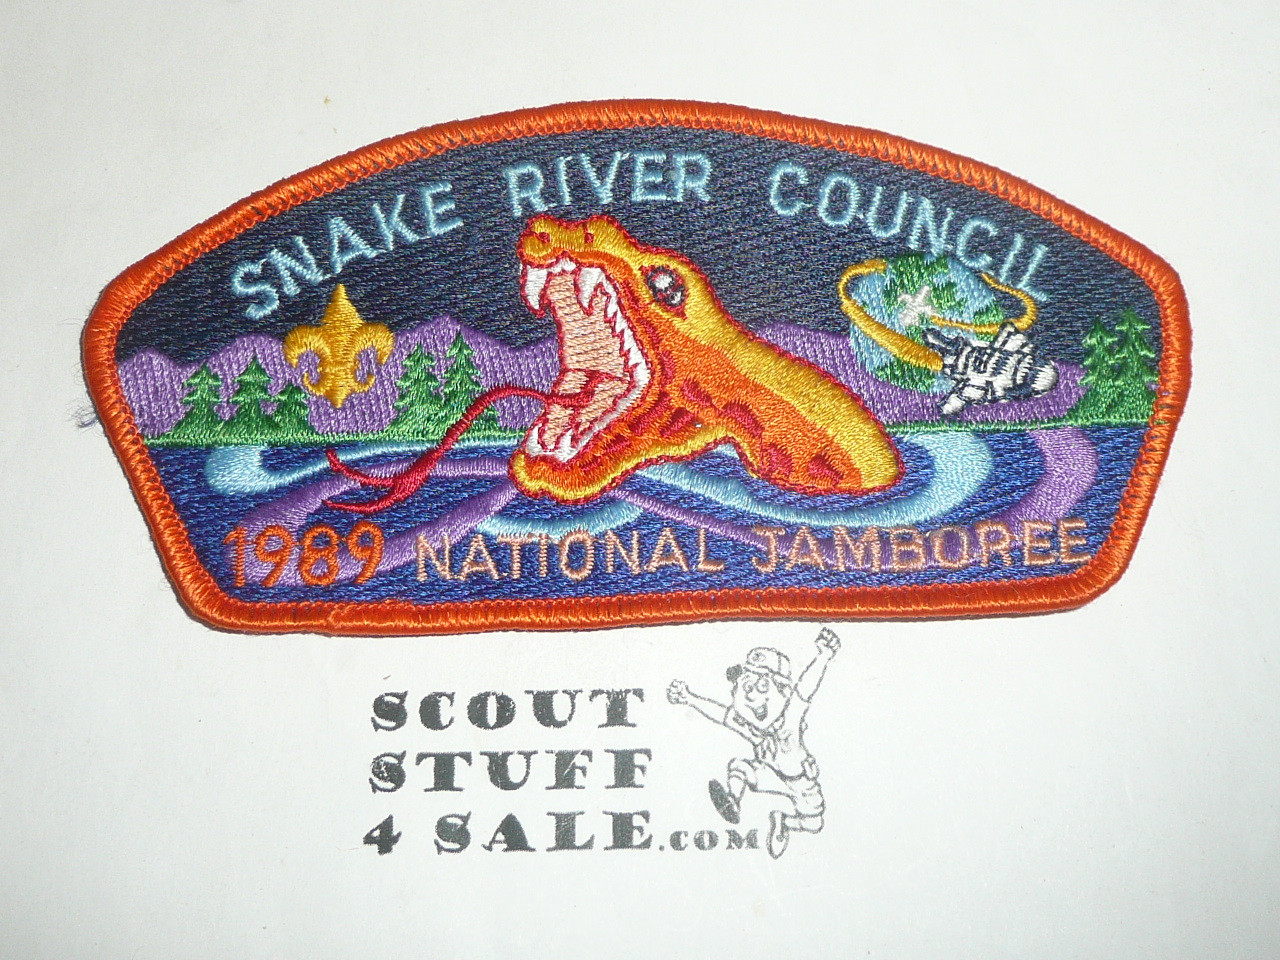 1989 National Jamboree JSP - Snake River Council